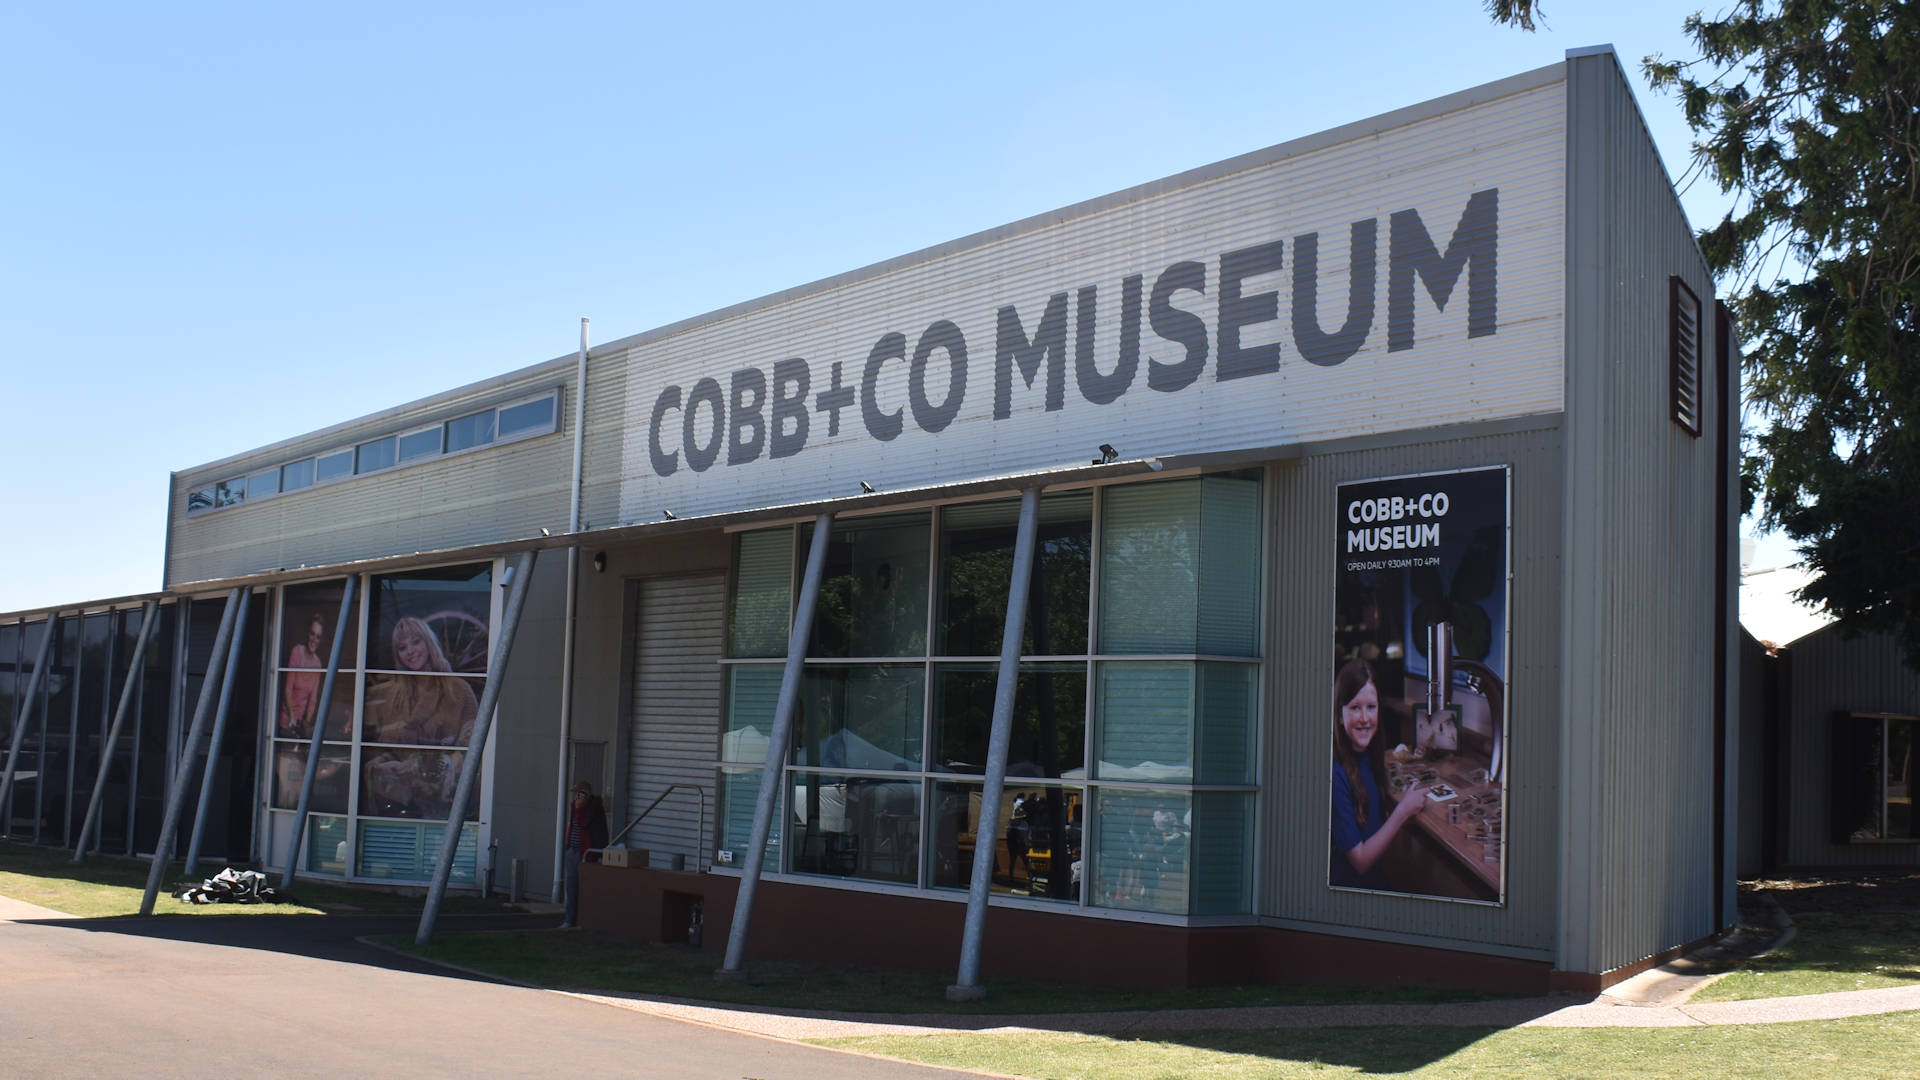 Cobb & Co Museum building in Toowoomba, Queensland